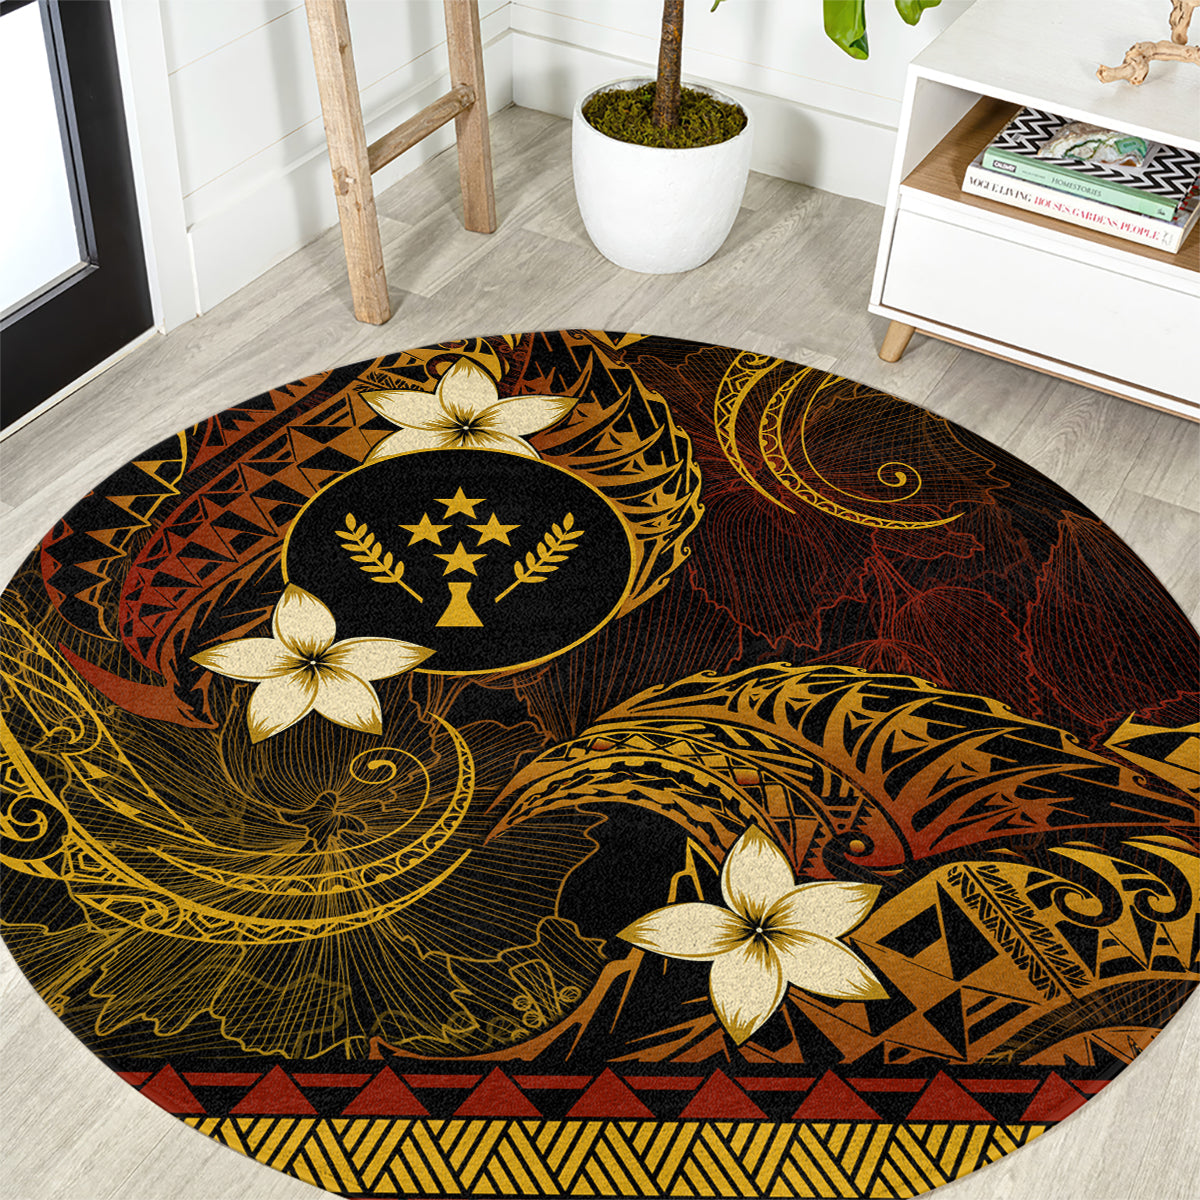 FSM Kosrae State Round Carpet Tribal Pattern Gold Version LT01 Gold - Polynesian Pride